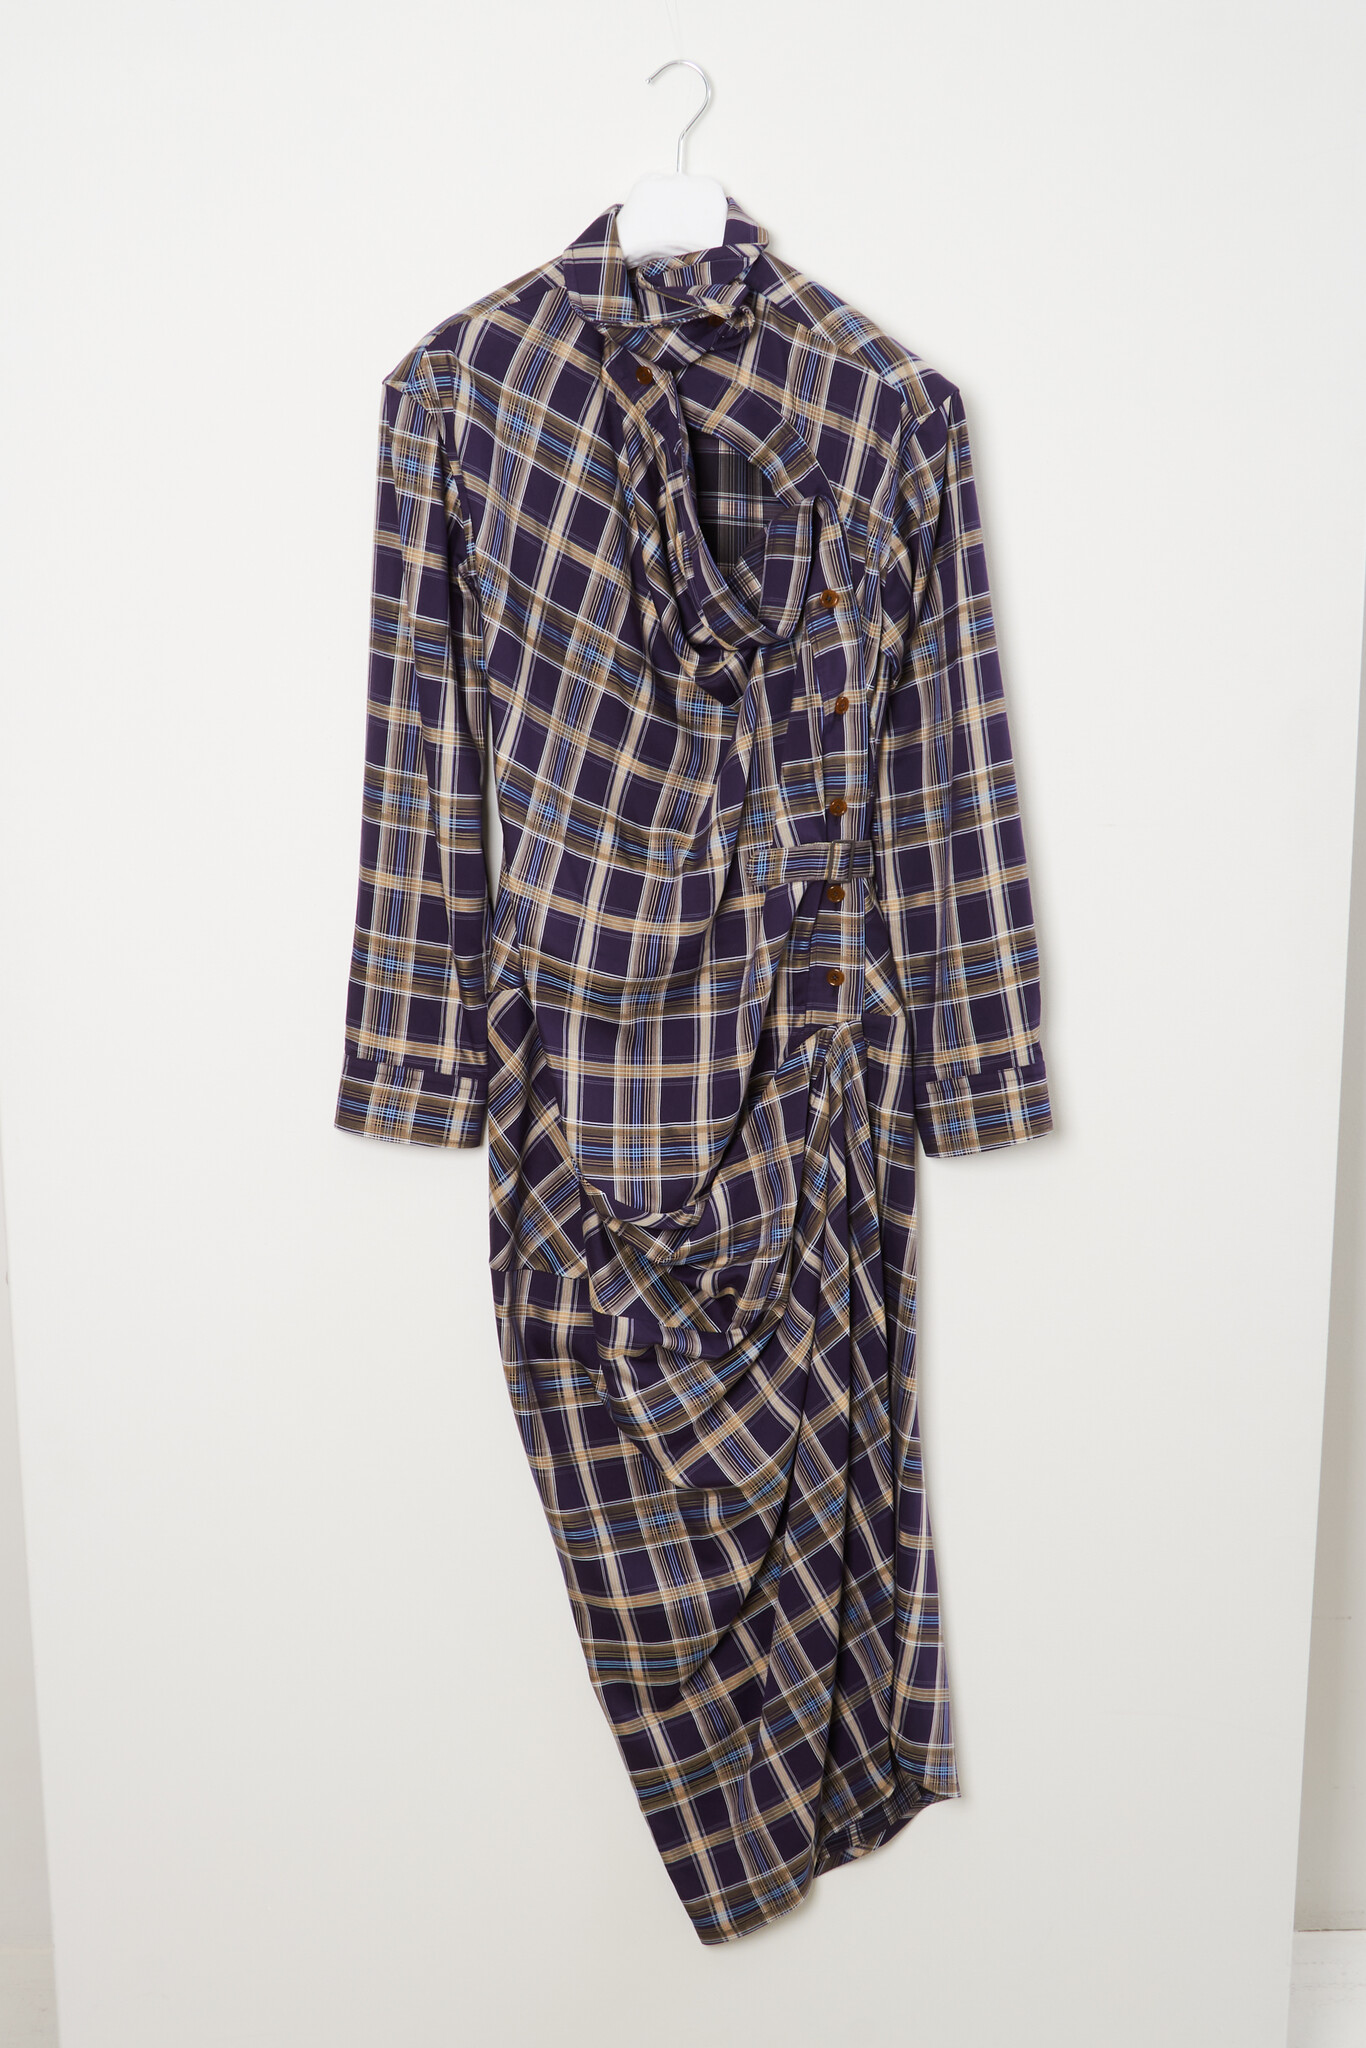 Vivienne Westwood Ming dress